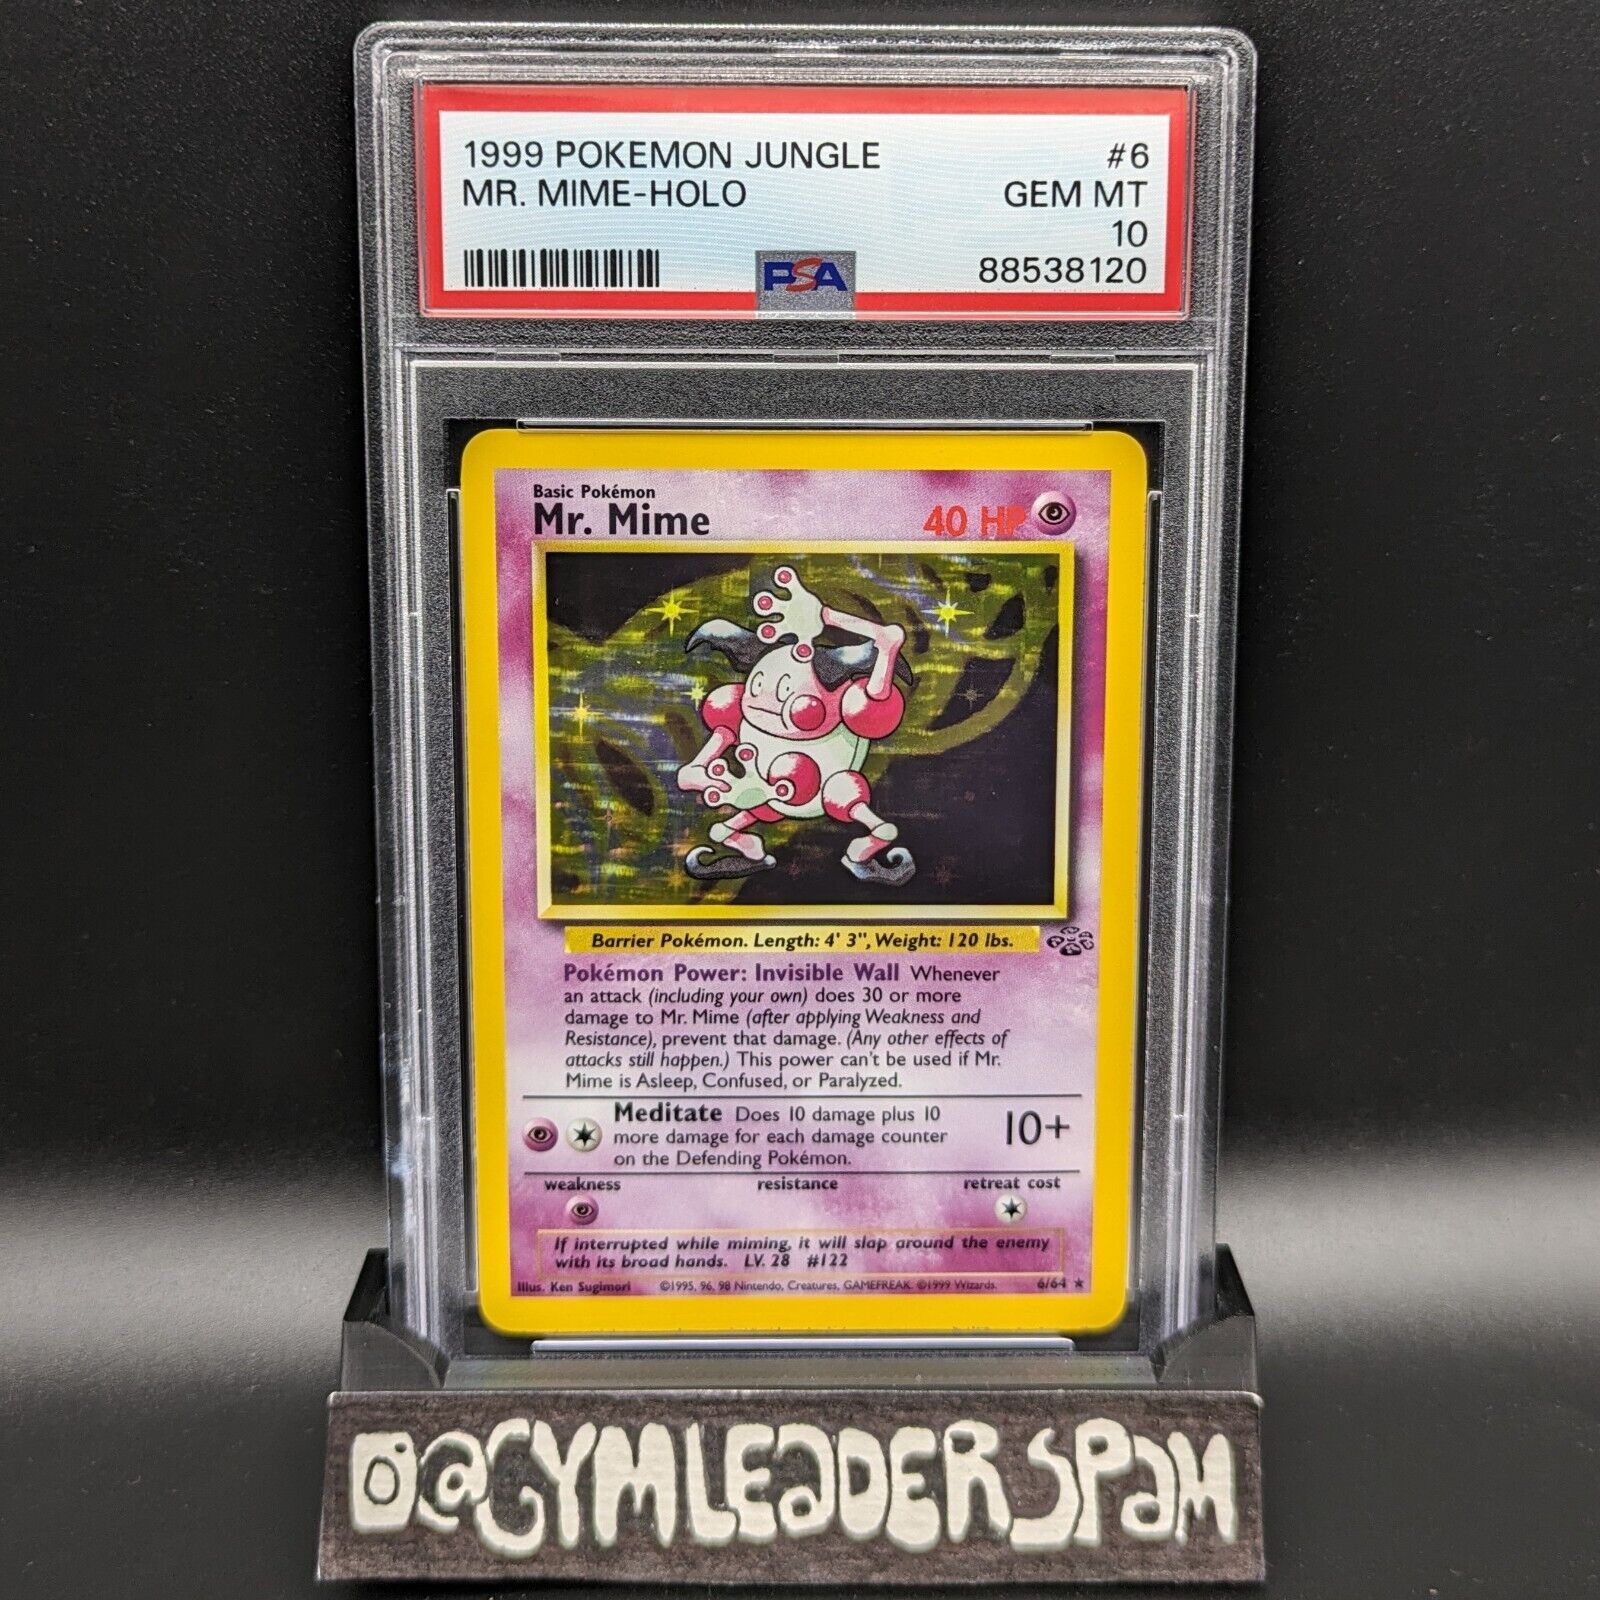 PSA 10 Mr. Mime Holo Rare #6/64 Gem Mint Pokémon Jungle Card